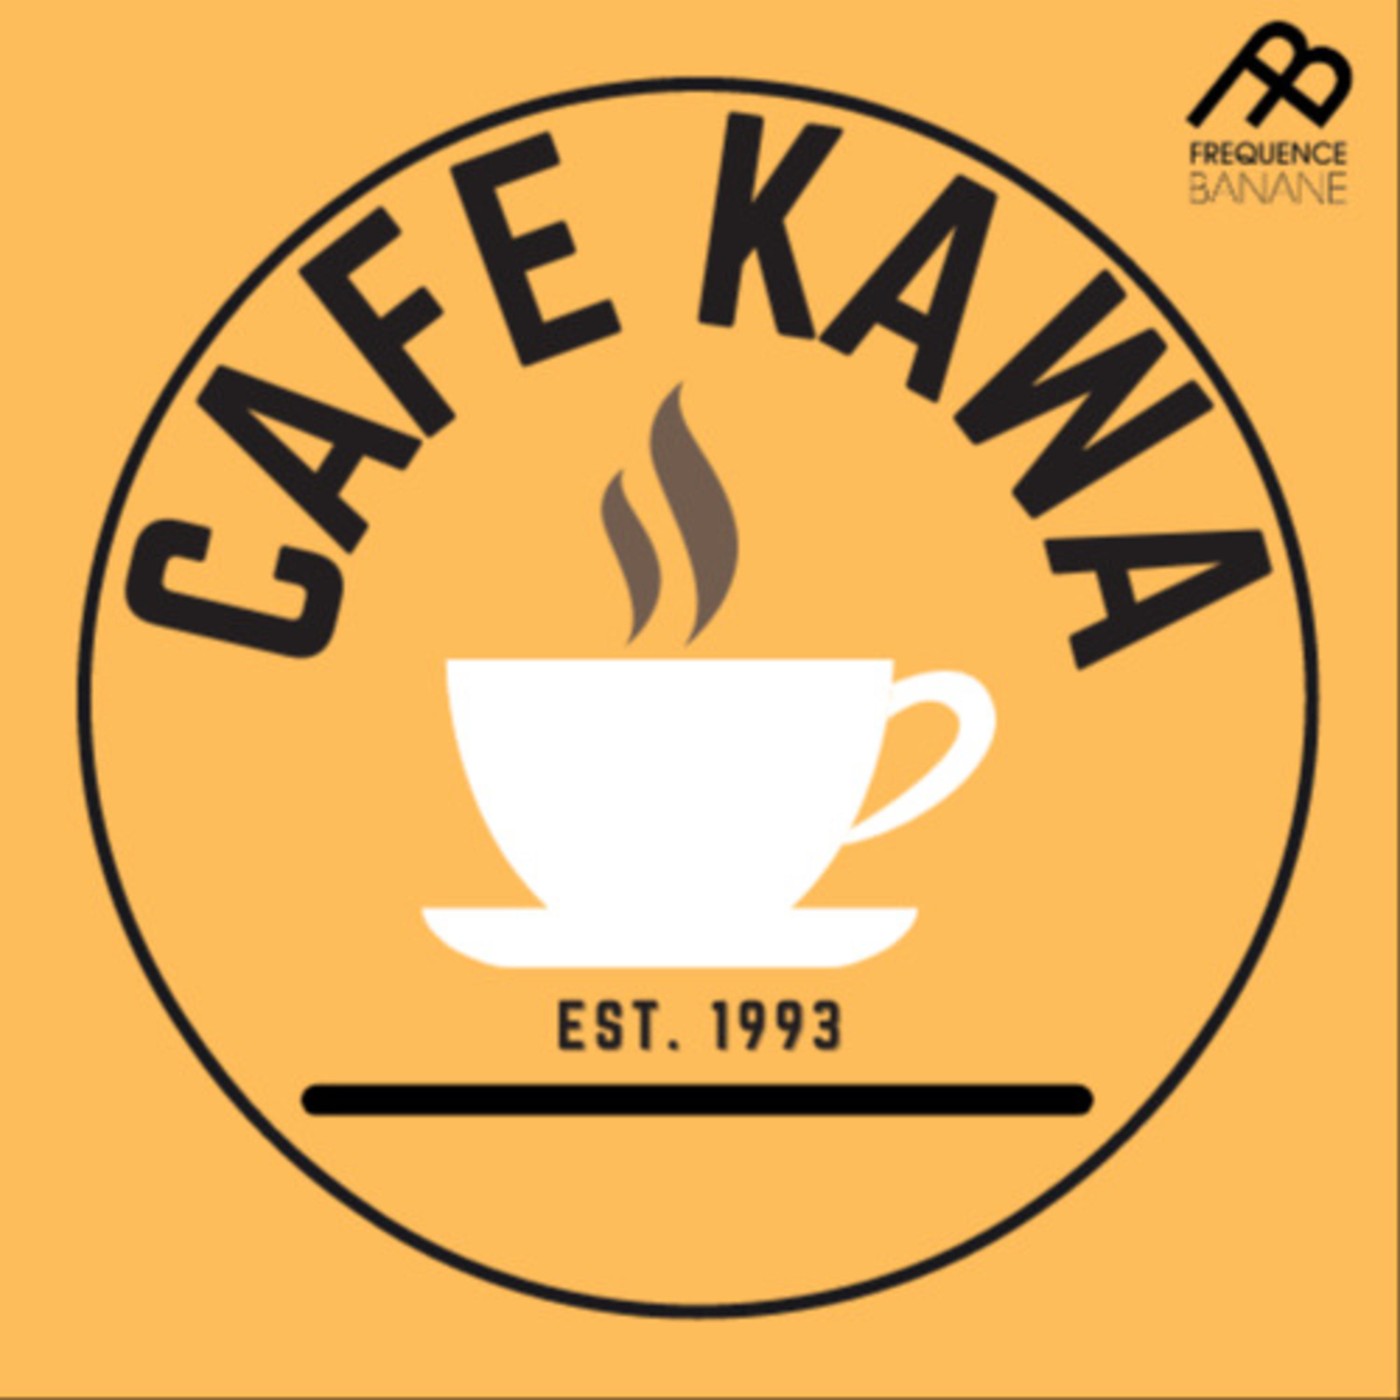 CaféKawa du 24/02/20 - ONYX